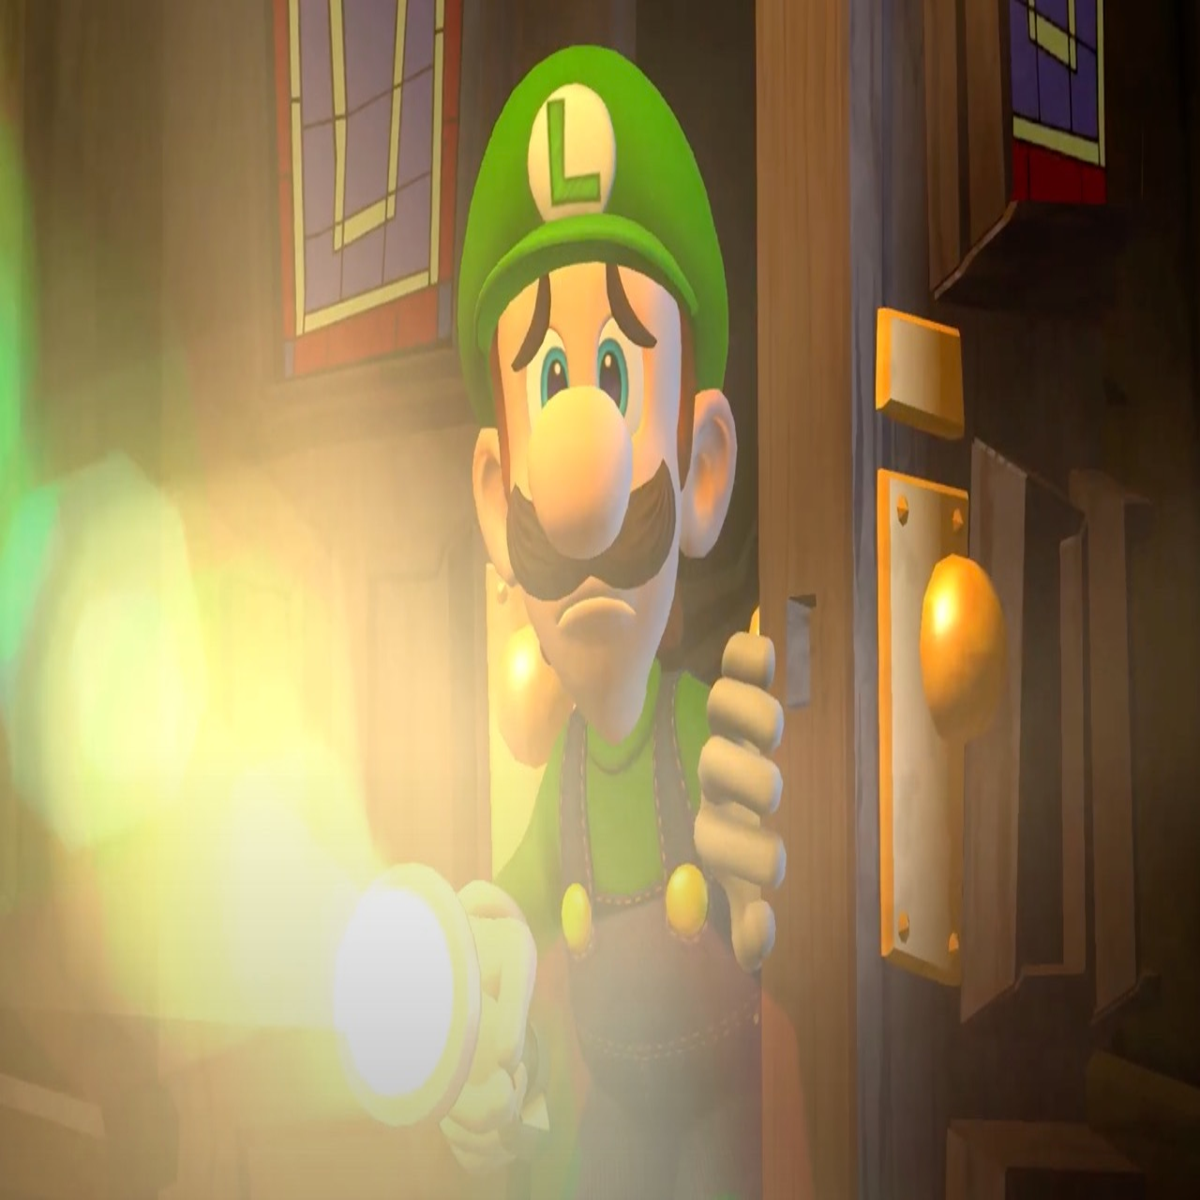 Luigi's Mansion 2 SWITCH - Reveal Trailer (HD) 